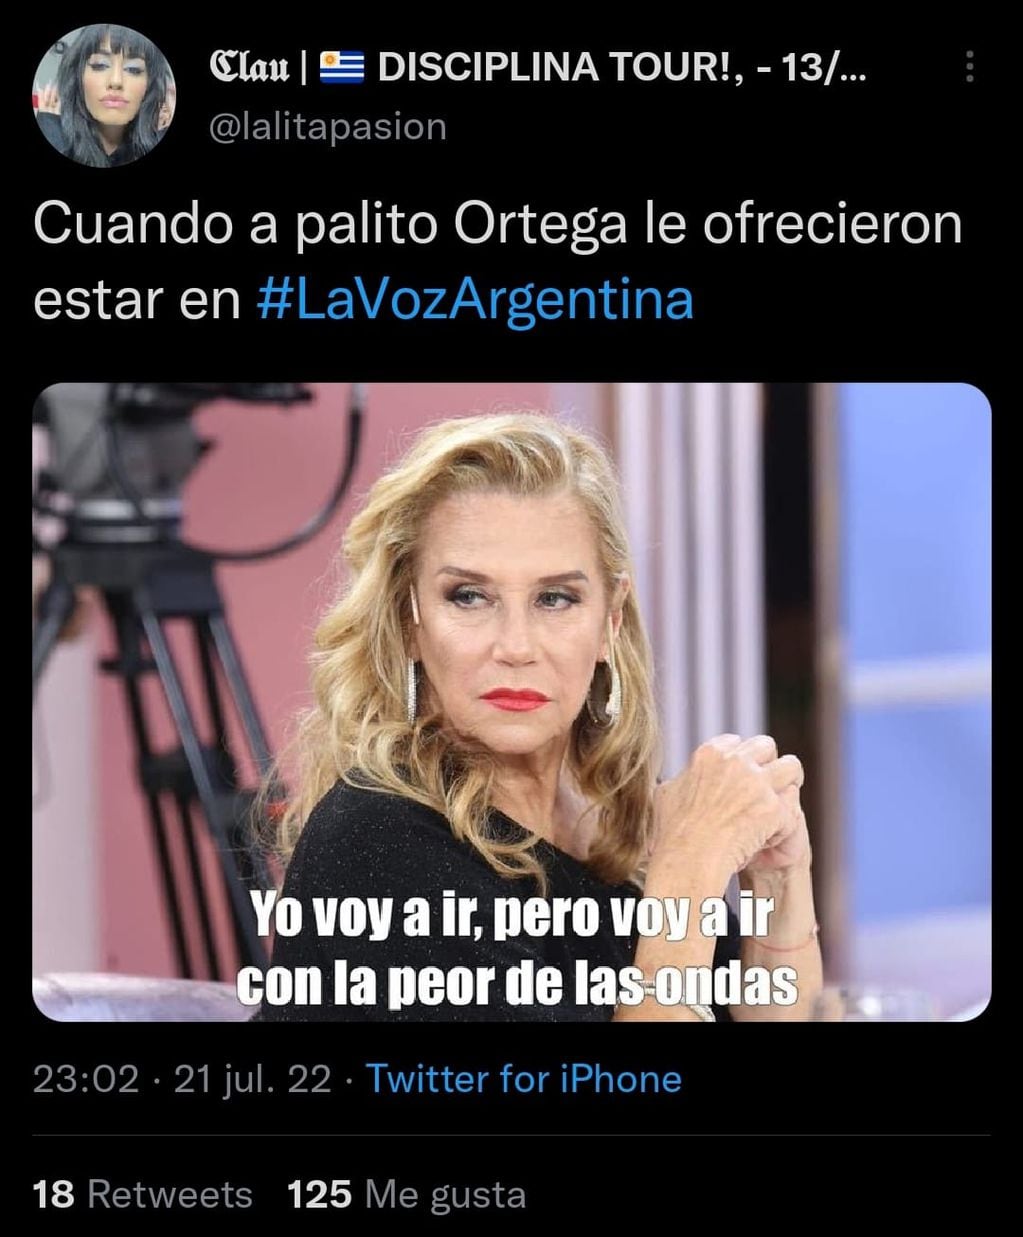 Los memes de Palito Ortega en Twitter (Captura de pantalla)